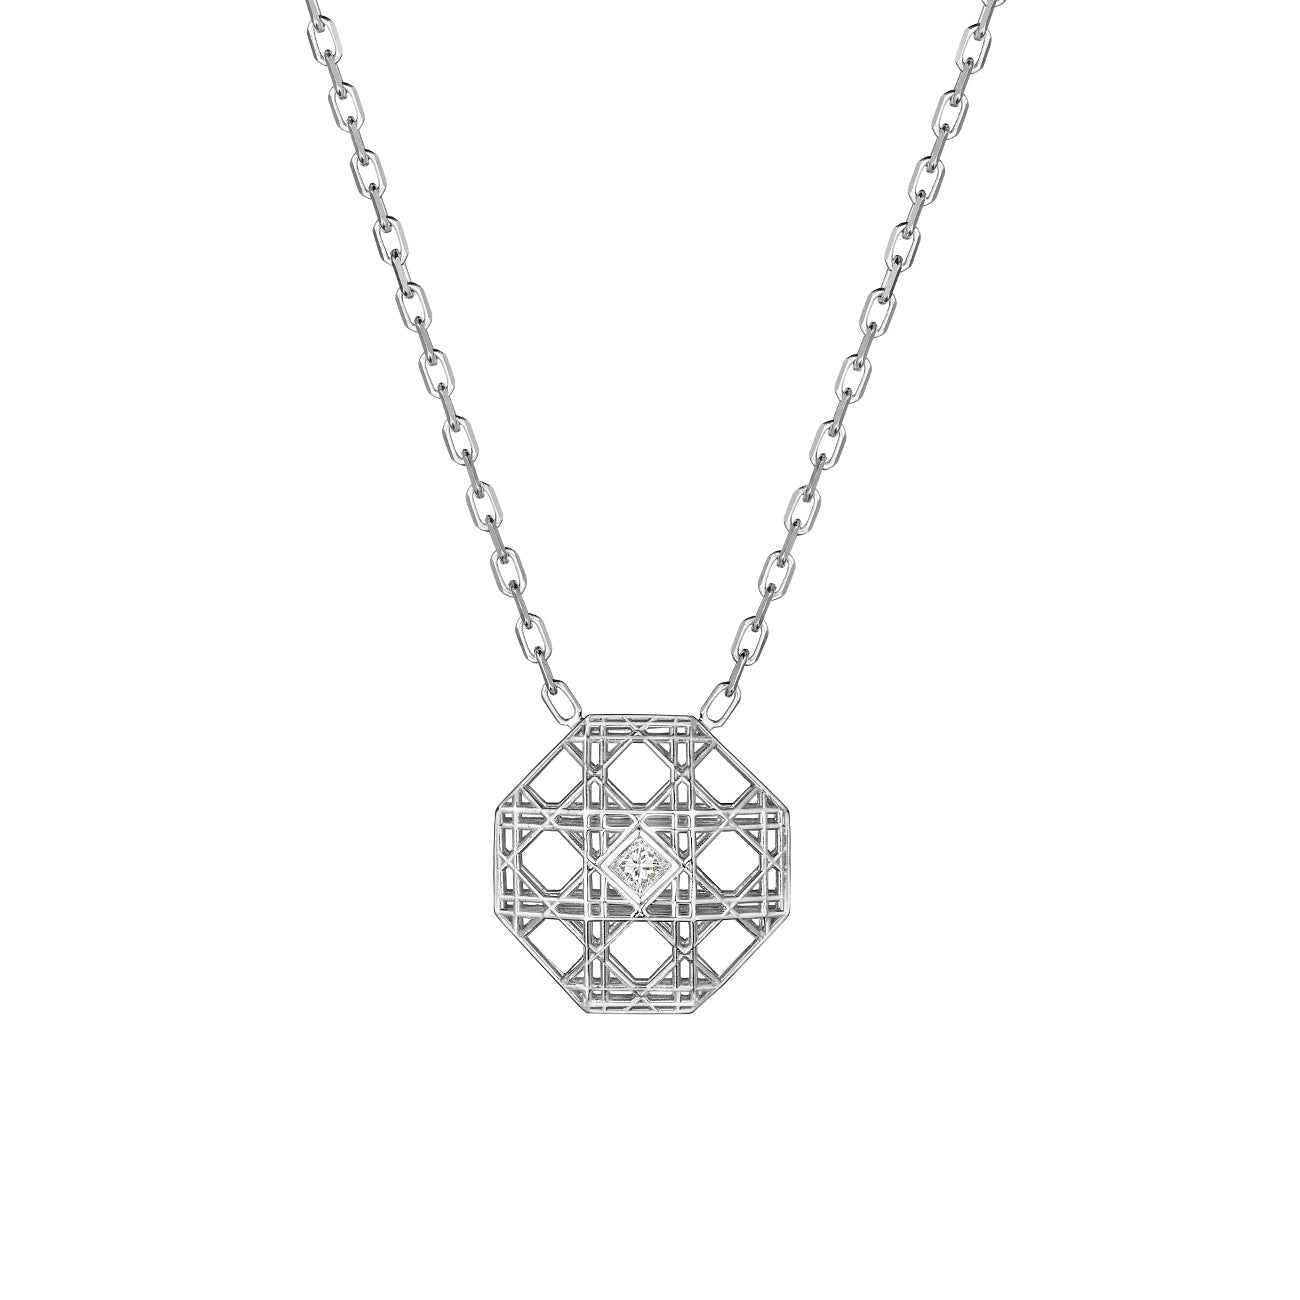 DouDou Pendant necklace, 18K White Gold and Princess Cut Diamond